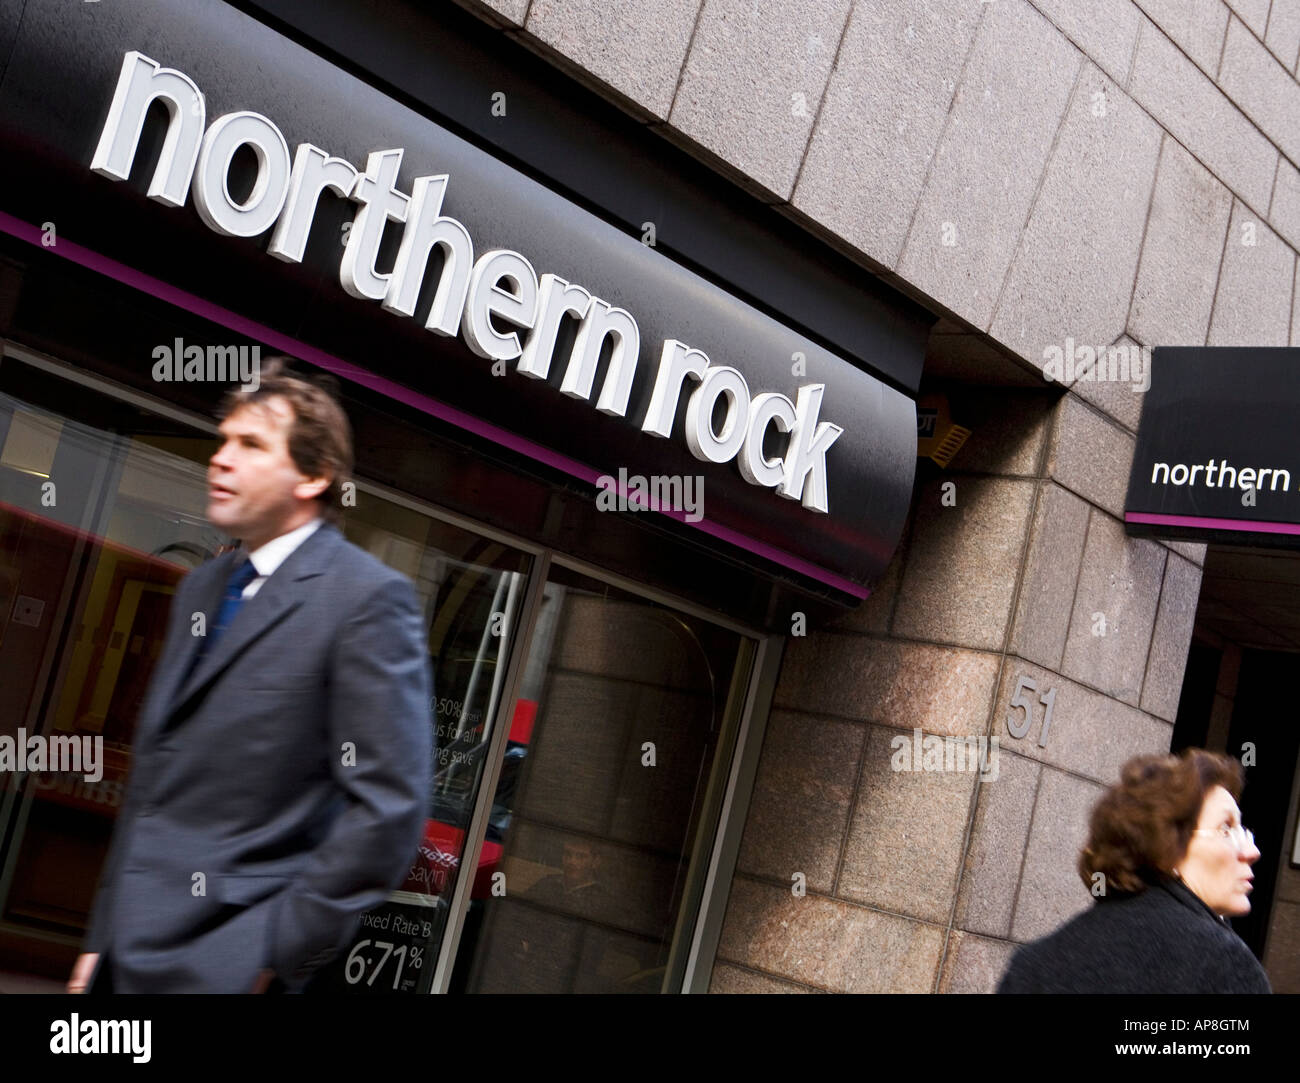 Northern Rock bank branch Stock Photo